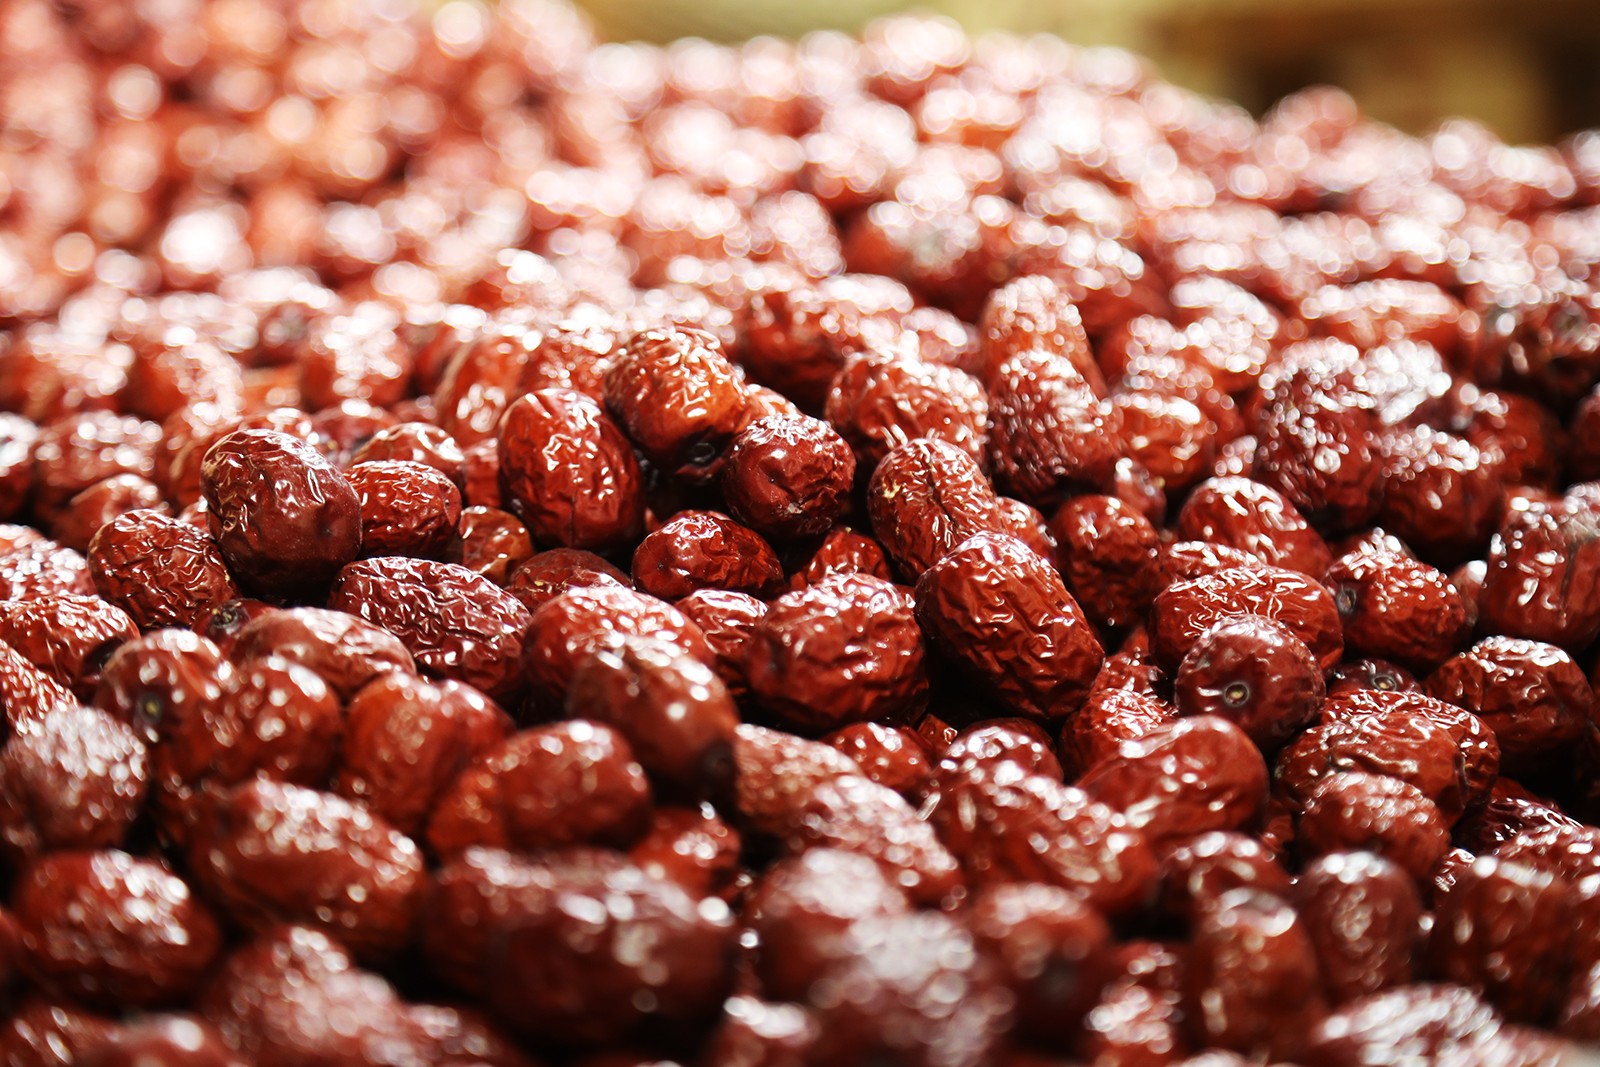 Dried jujubes are displayed for sale at the Xinjiang International Grand Bazaar in Urumqi. /CGTN